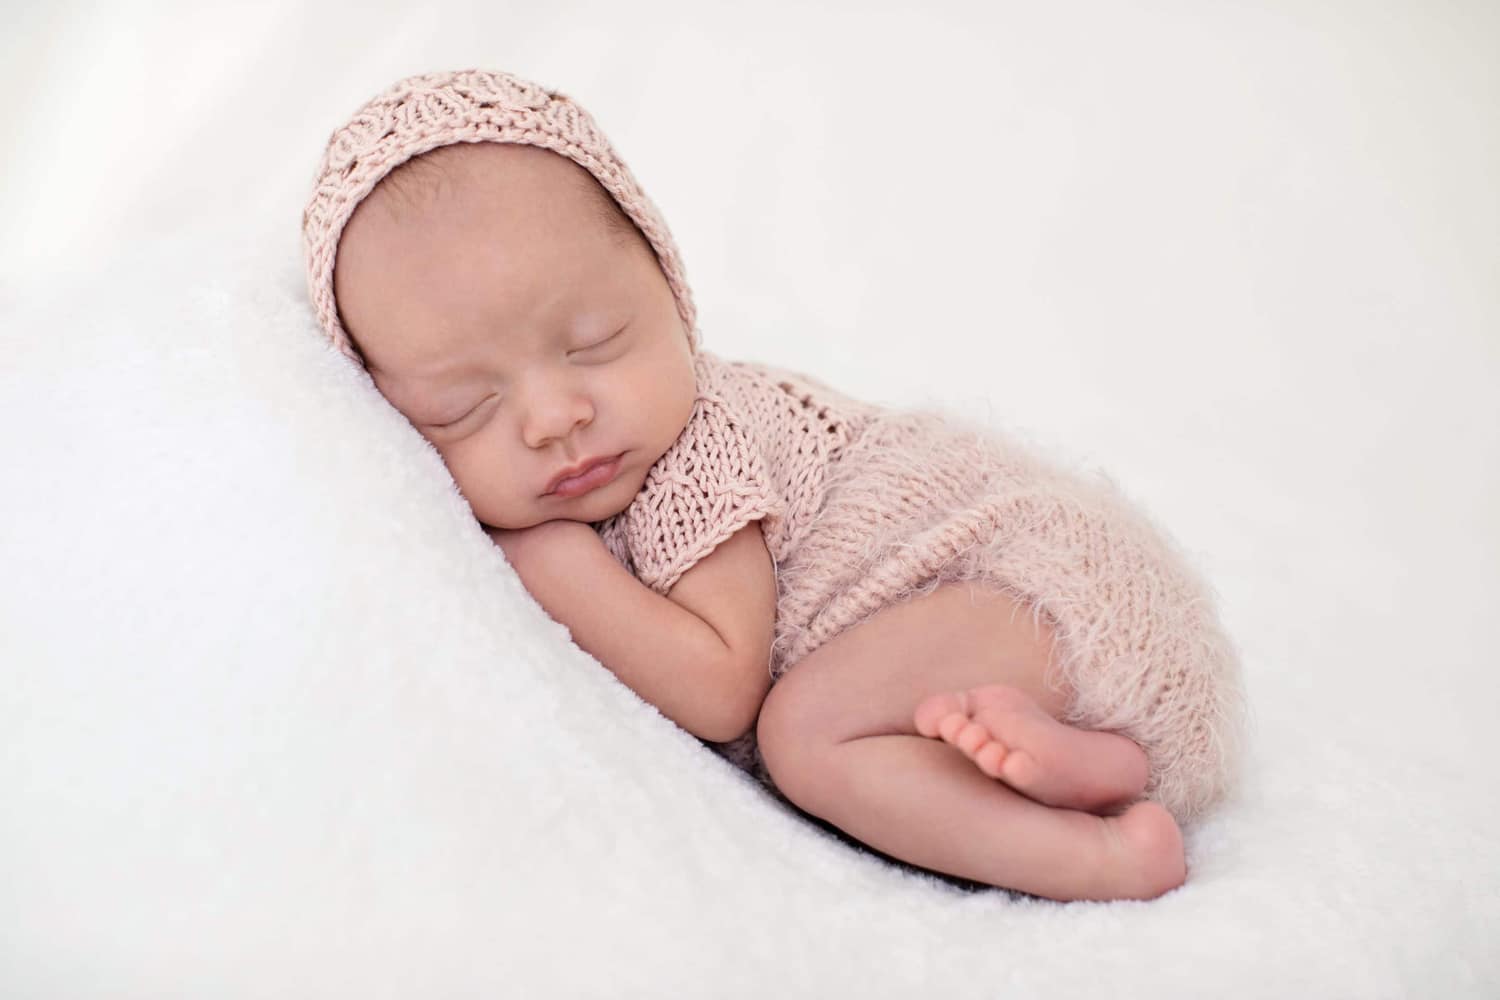 Infant 'Sleep Machines' Pose Hearing Loss Risk - ABC News